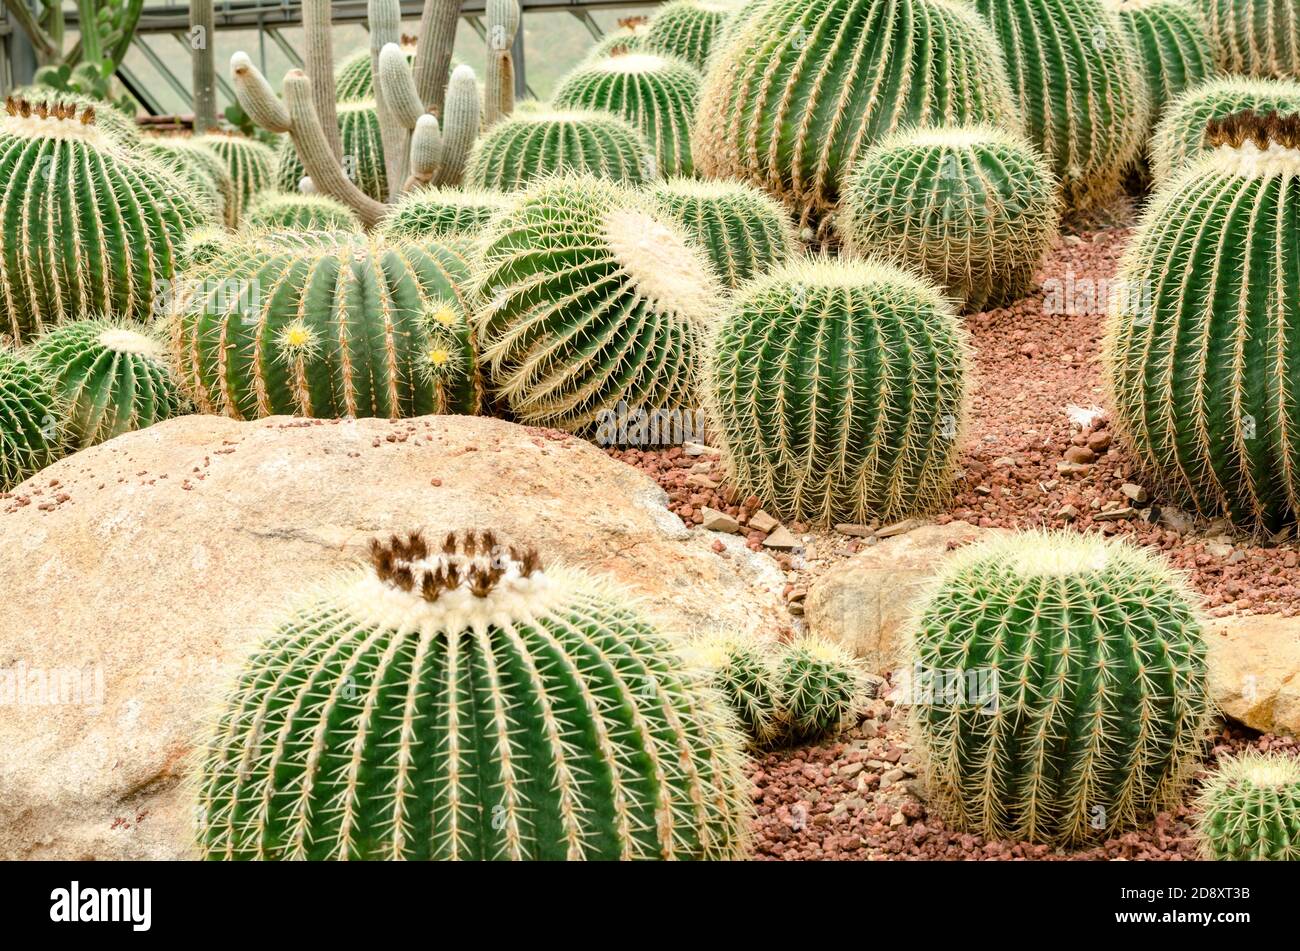 Golden Barrel Cactus plant Stock Photo